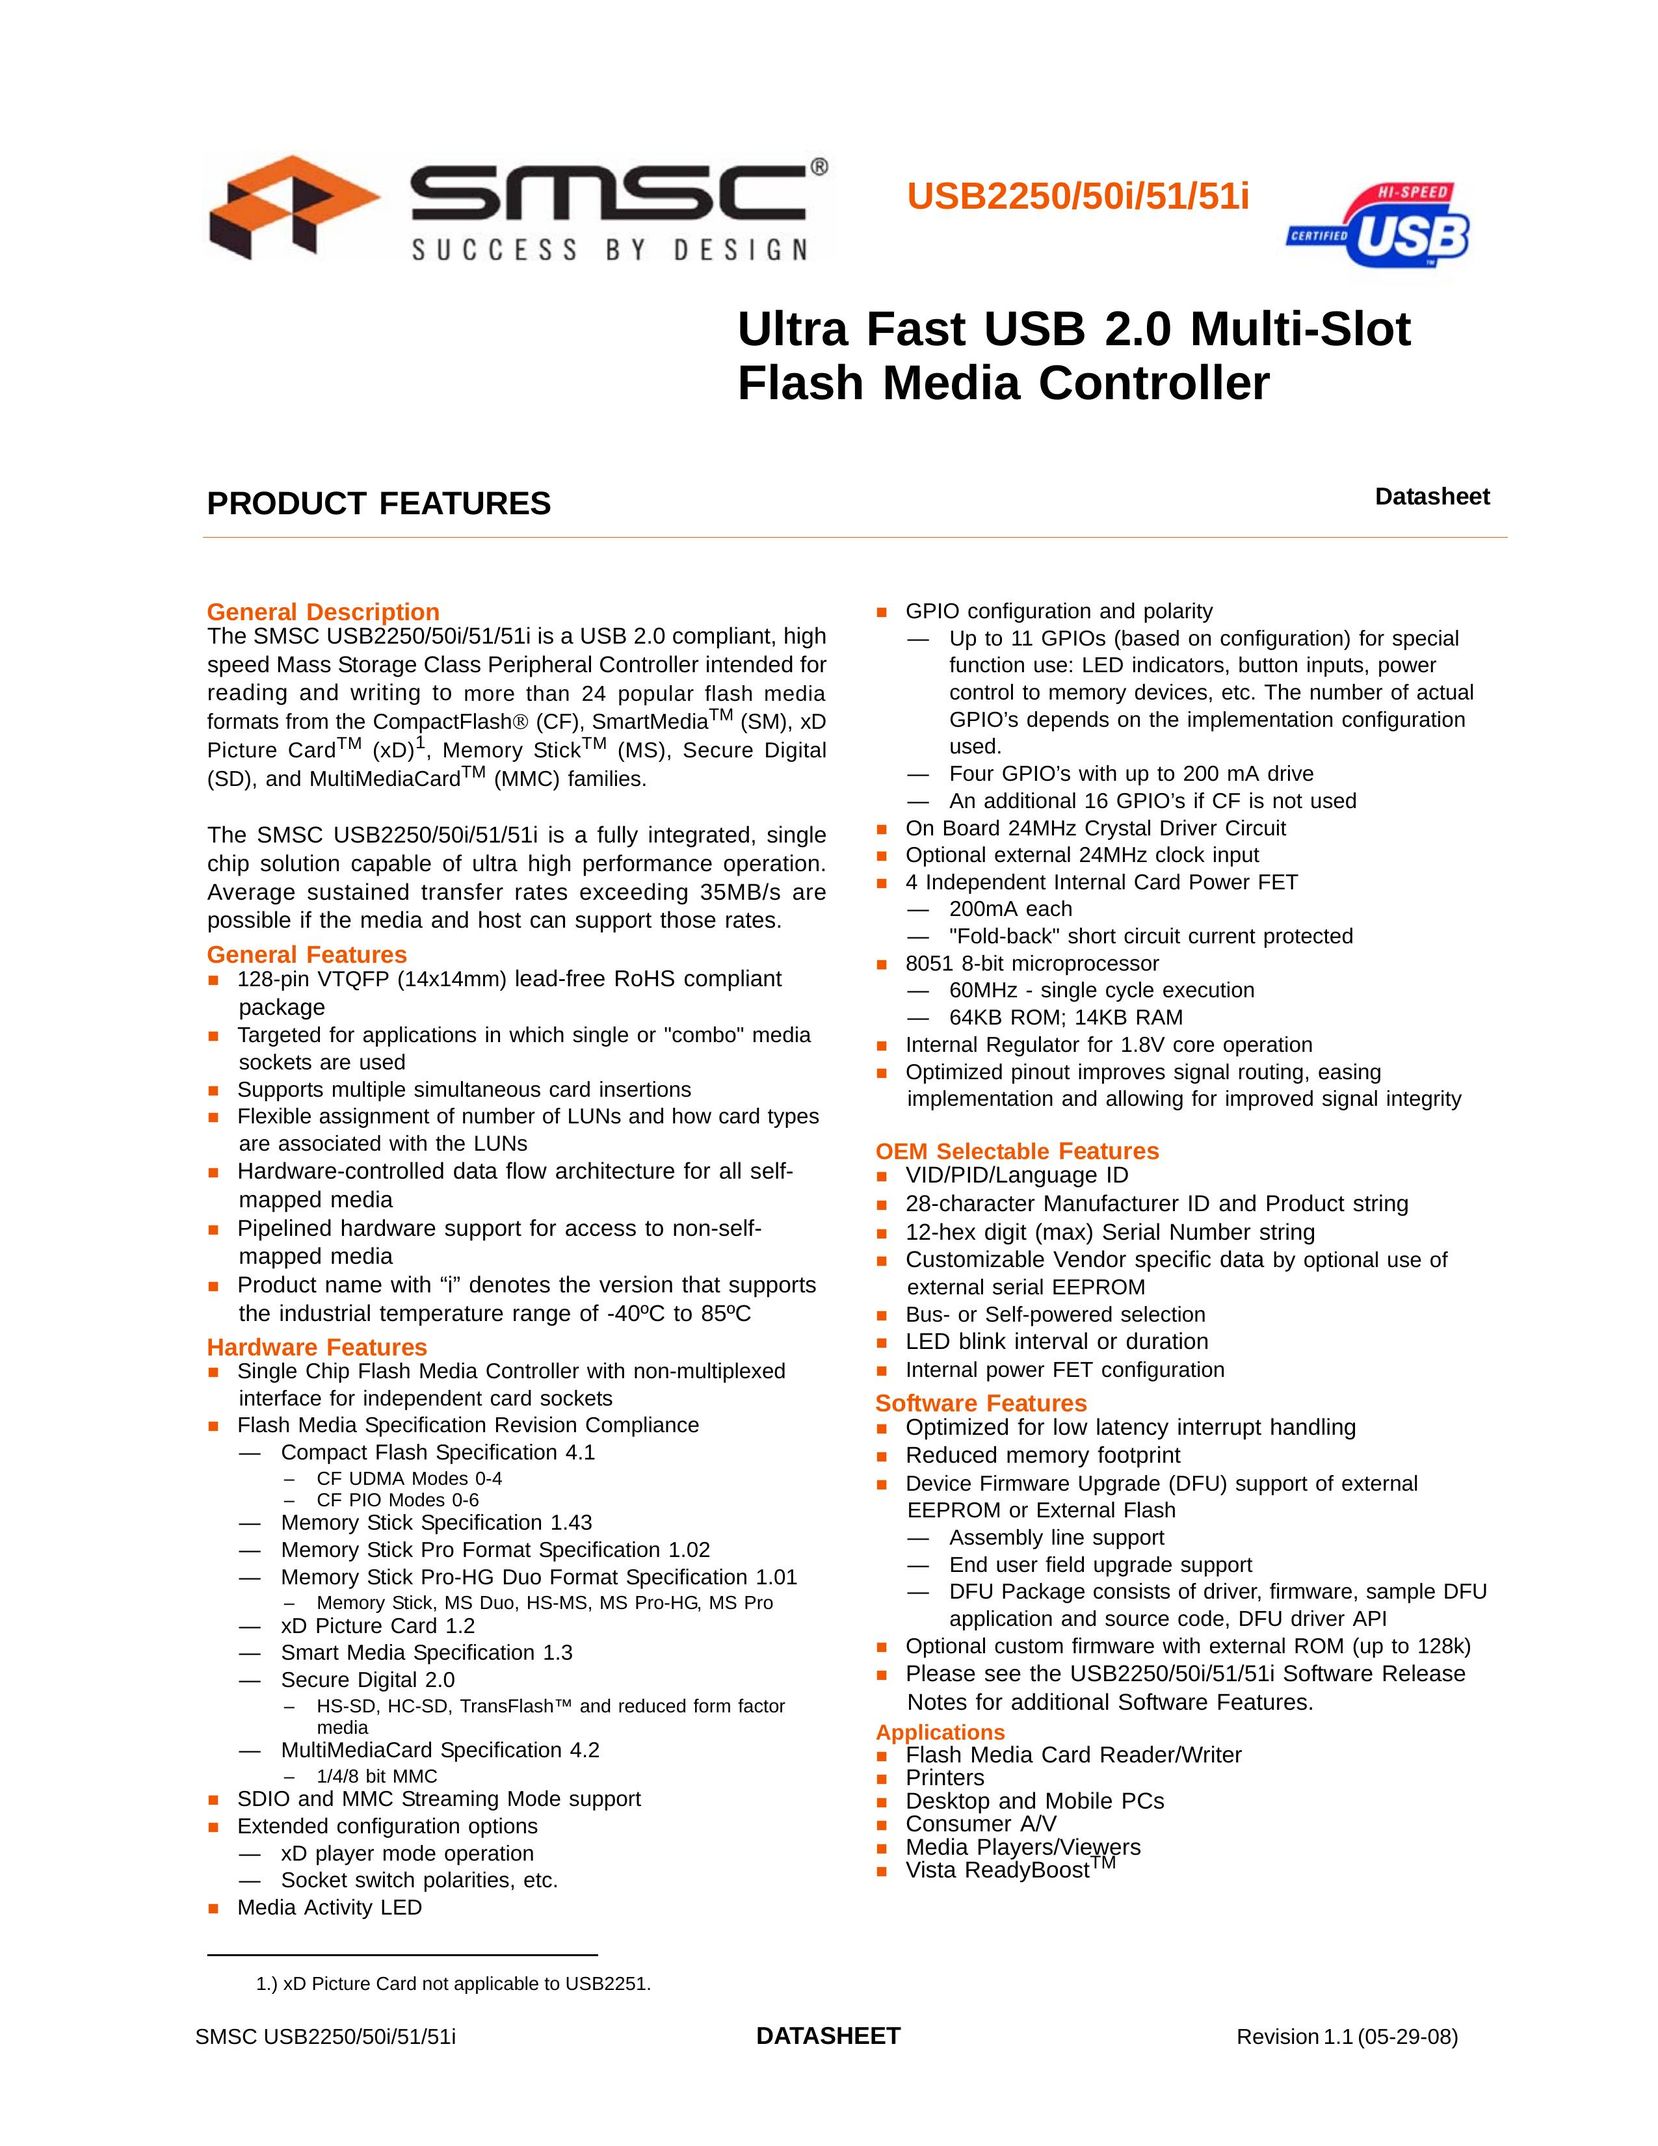 SMSC USB2250i Computer Drive User Manual